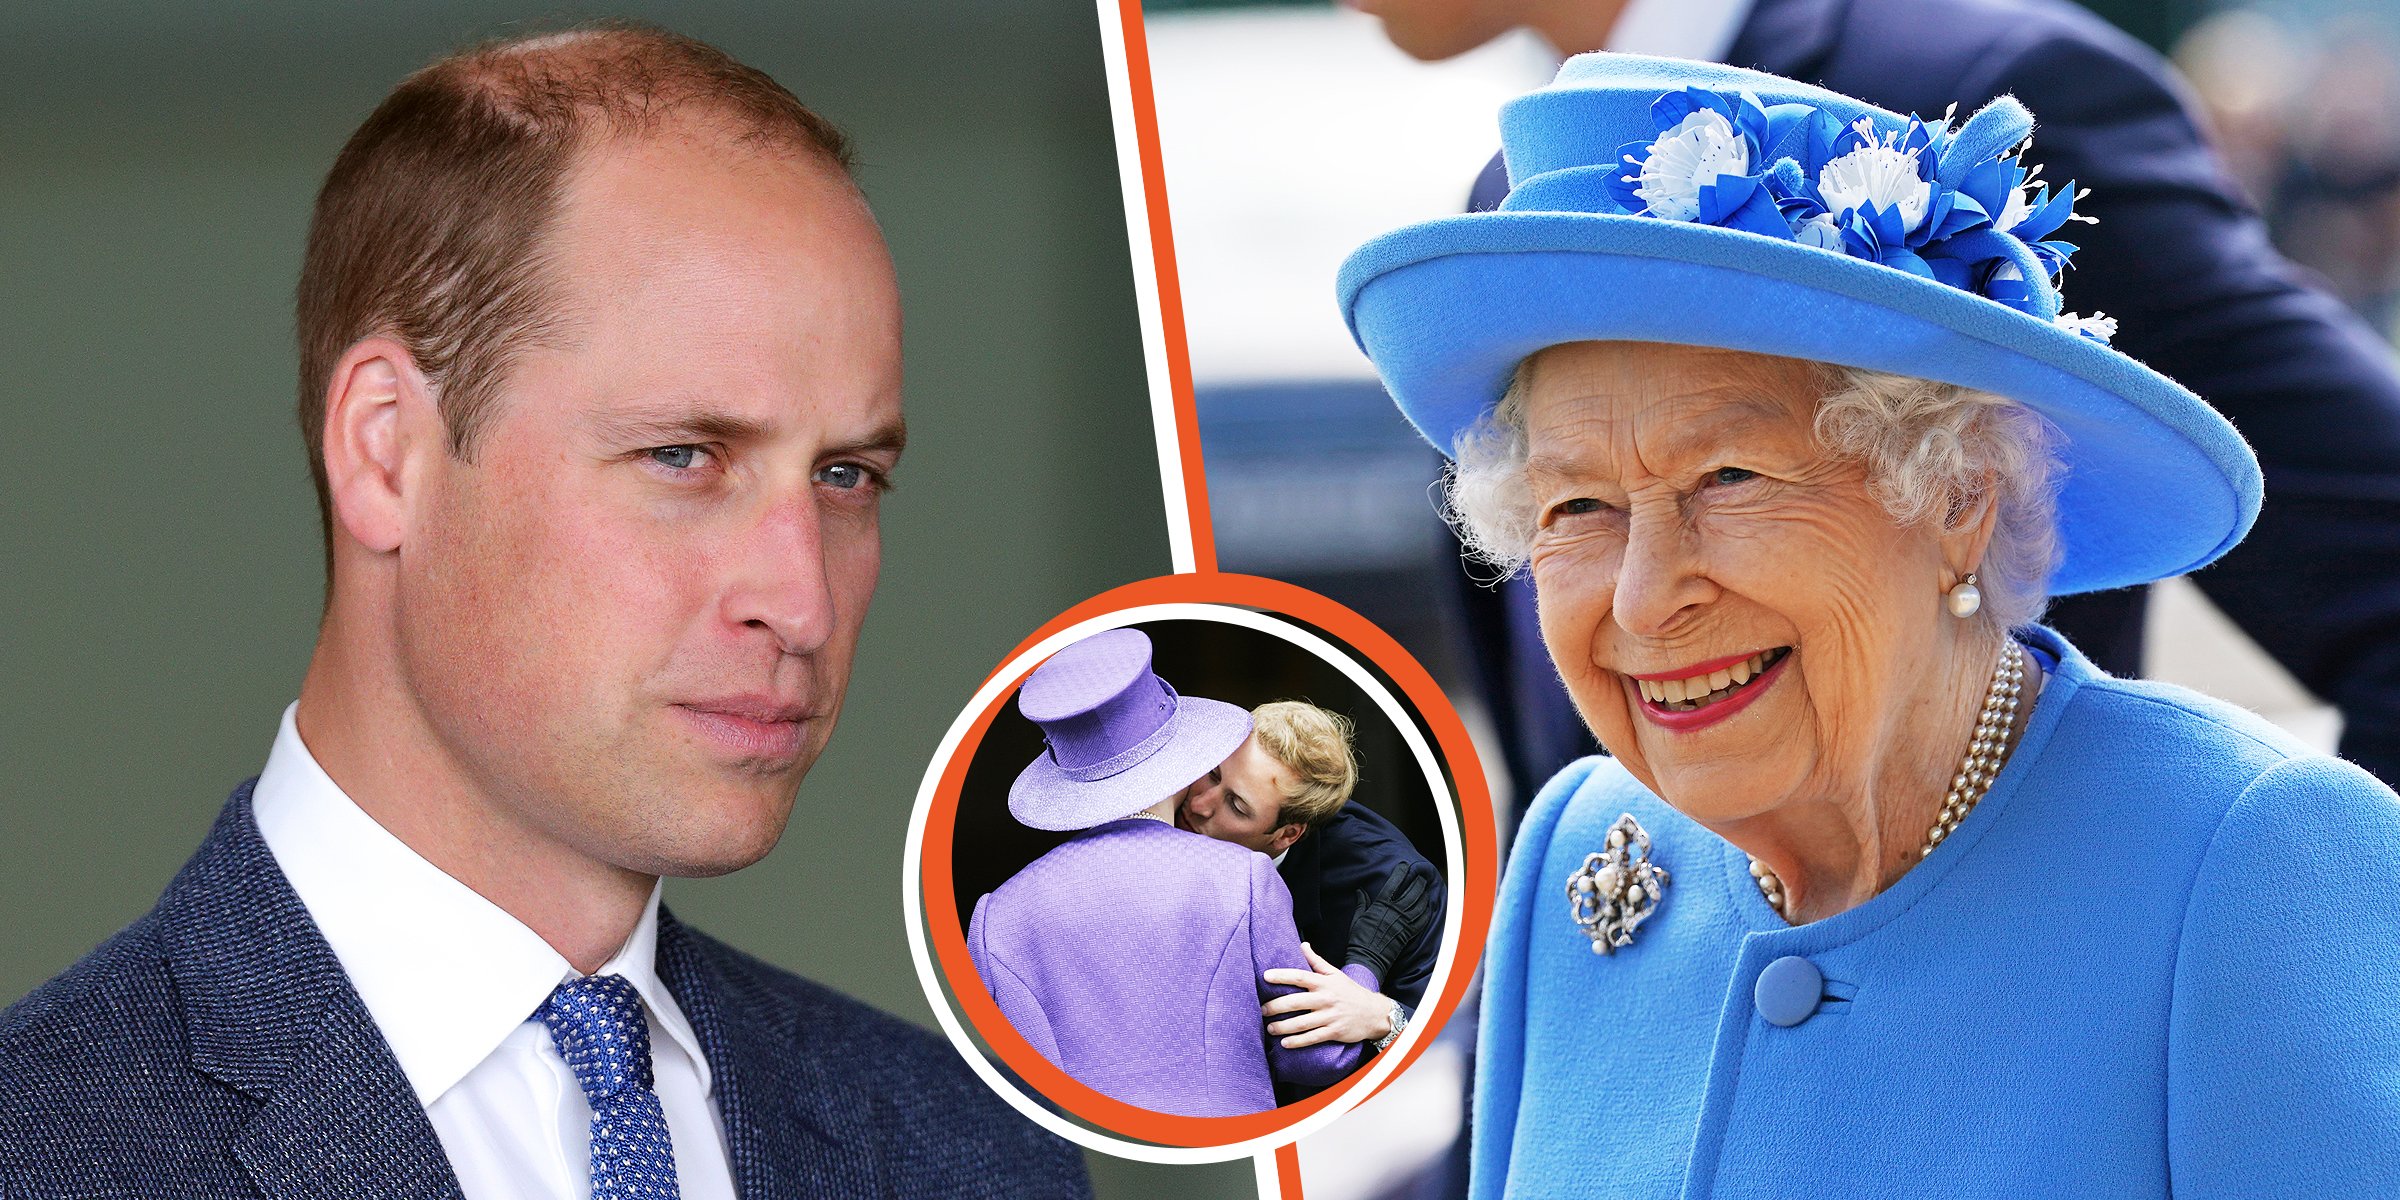 El príncipe William. | El príncipe William besando a la reina Elizabeth II. | La reina Elizabeth II. | Foto: Getty Images